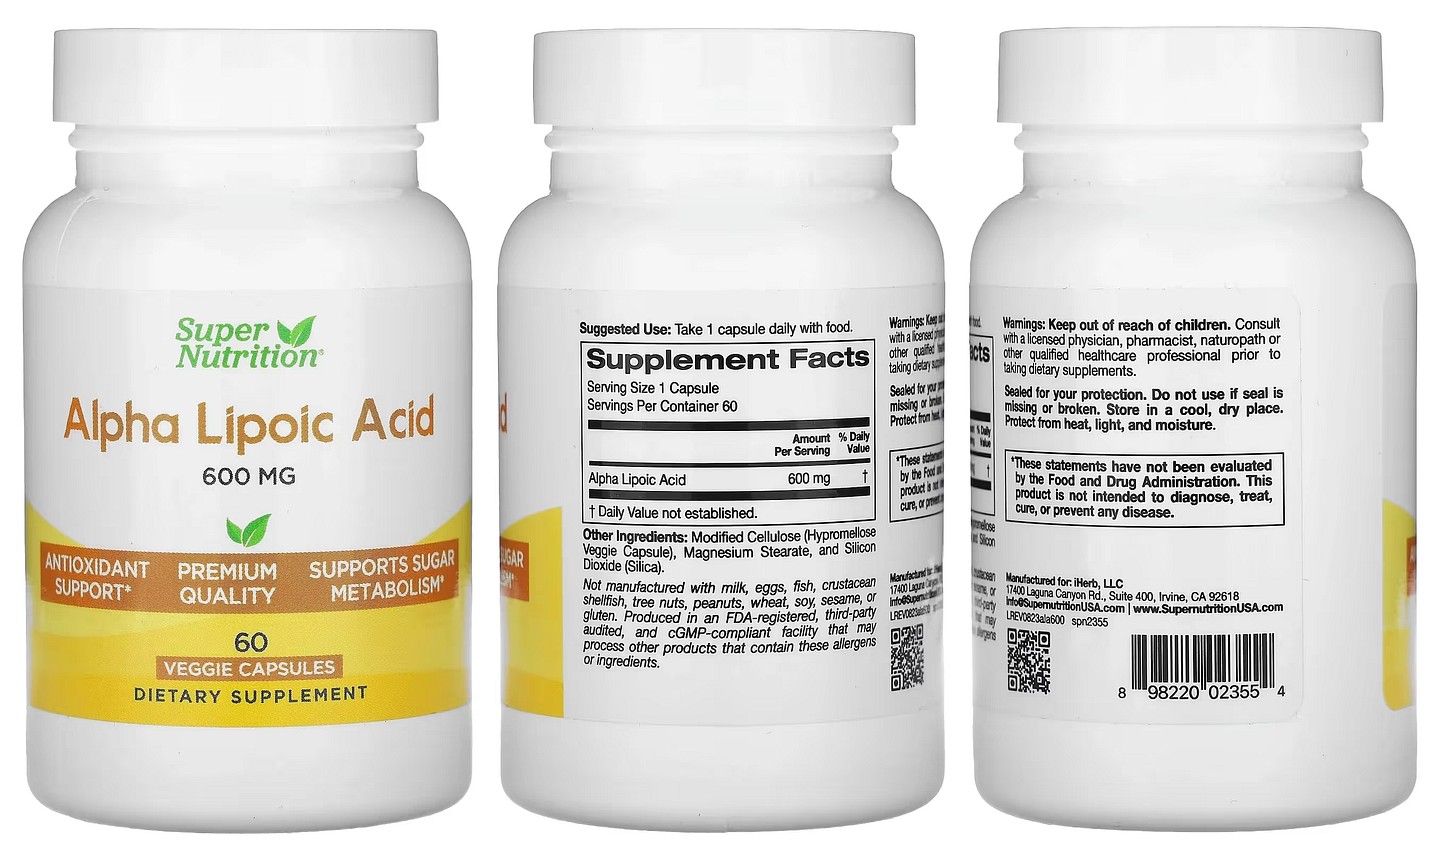 Super Nutrition, Alpha Lipoic Acid packaging